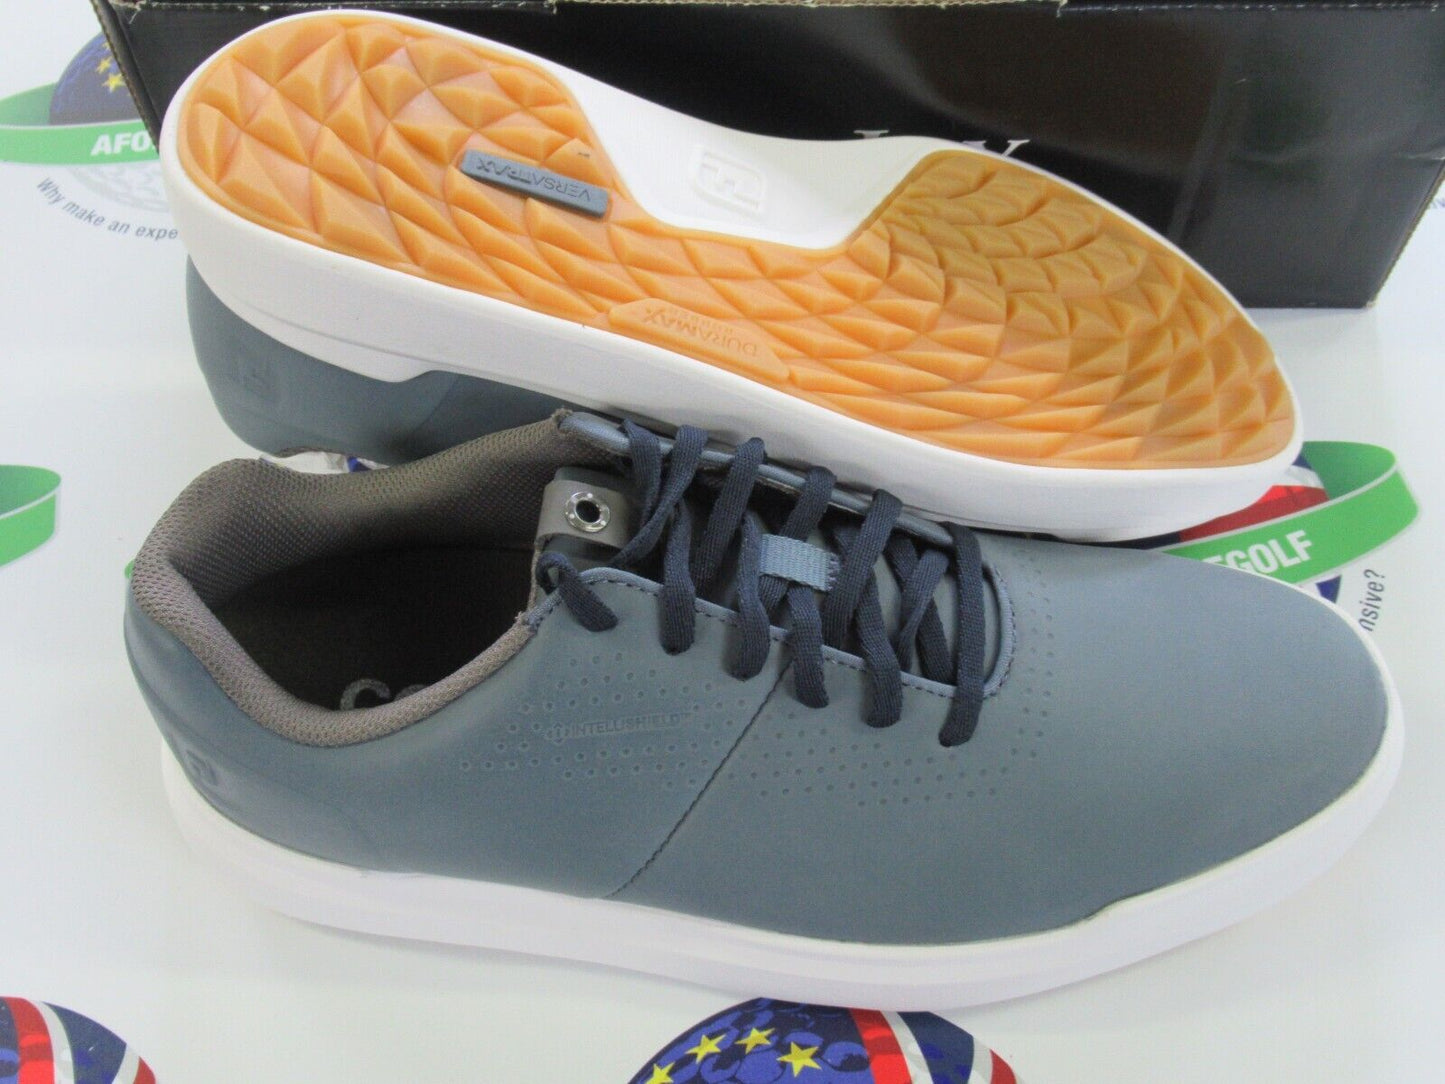 footjoy contour casual golf shoes 54087k grey uk size 9 medium